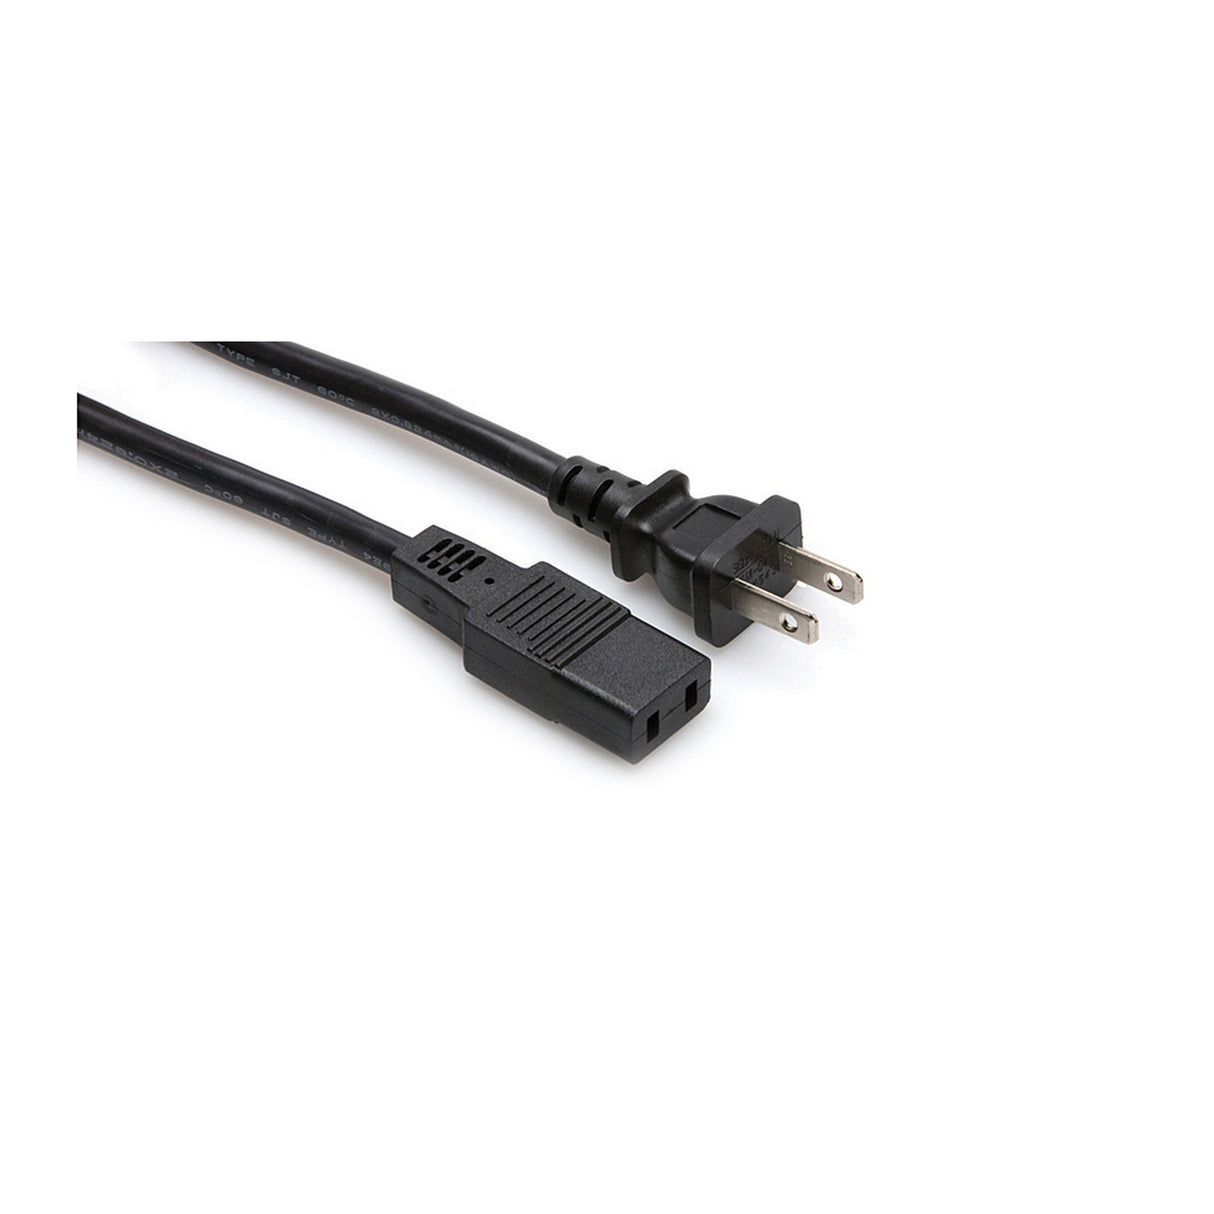 Hosa PWC-178 IEC C9 to NEMA 1-15P Power Cord Cable, 8-Feet (Used)